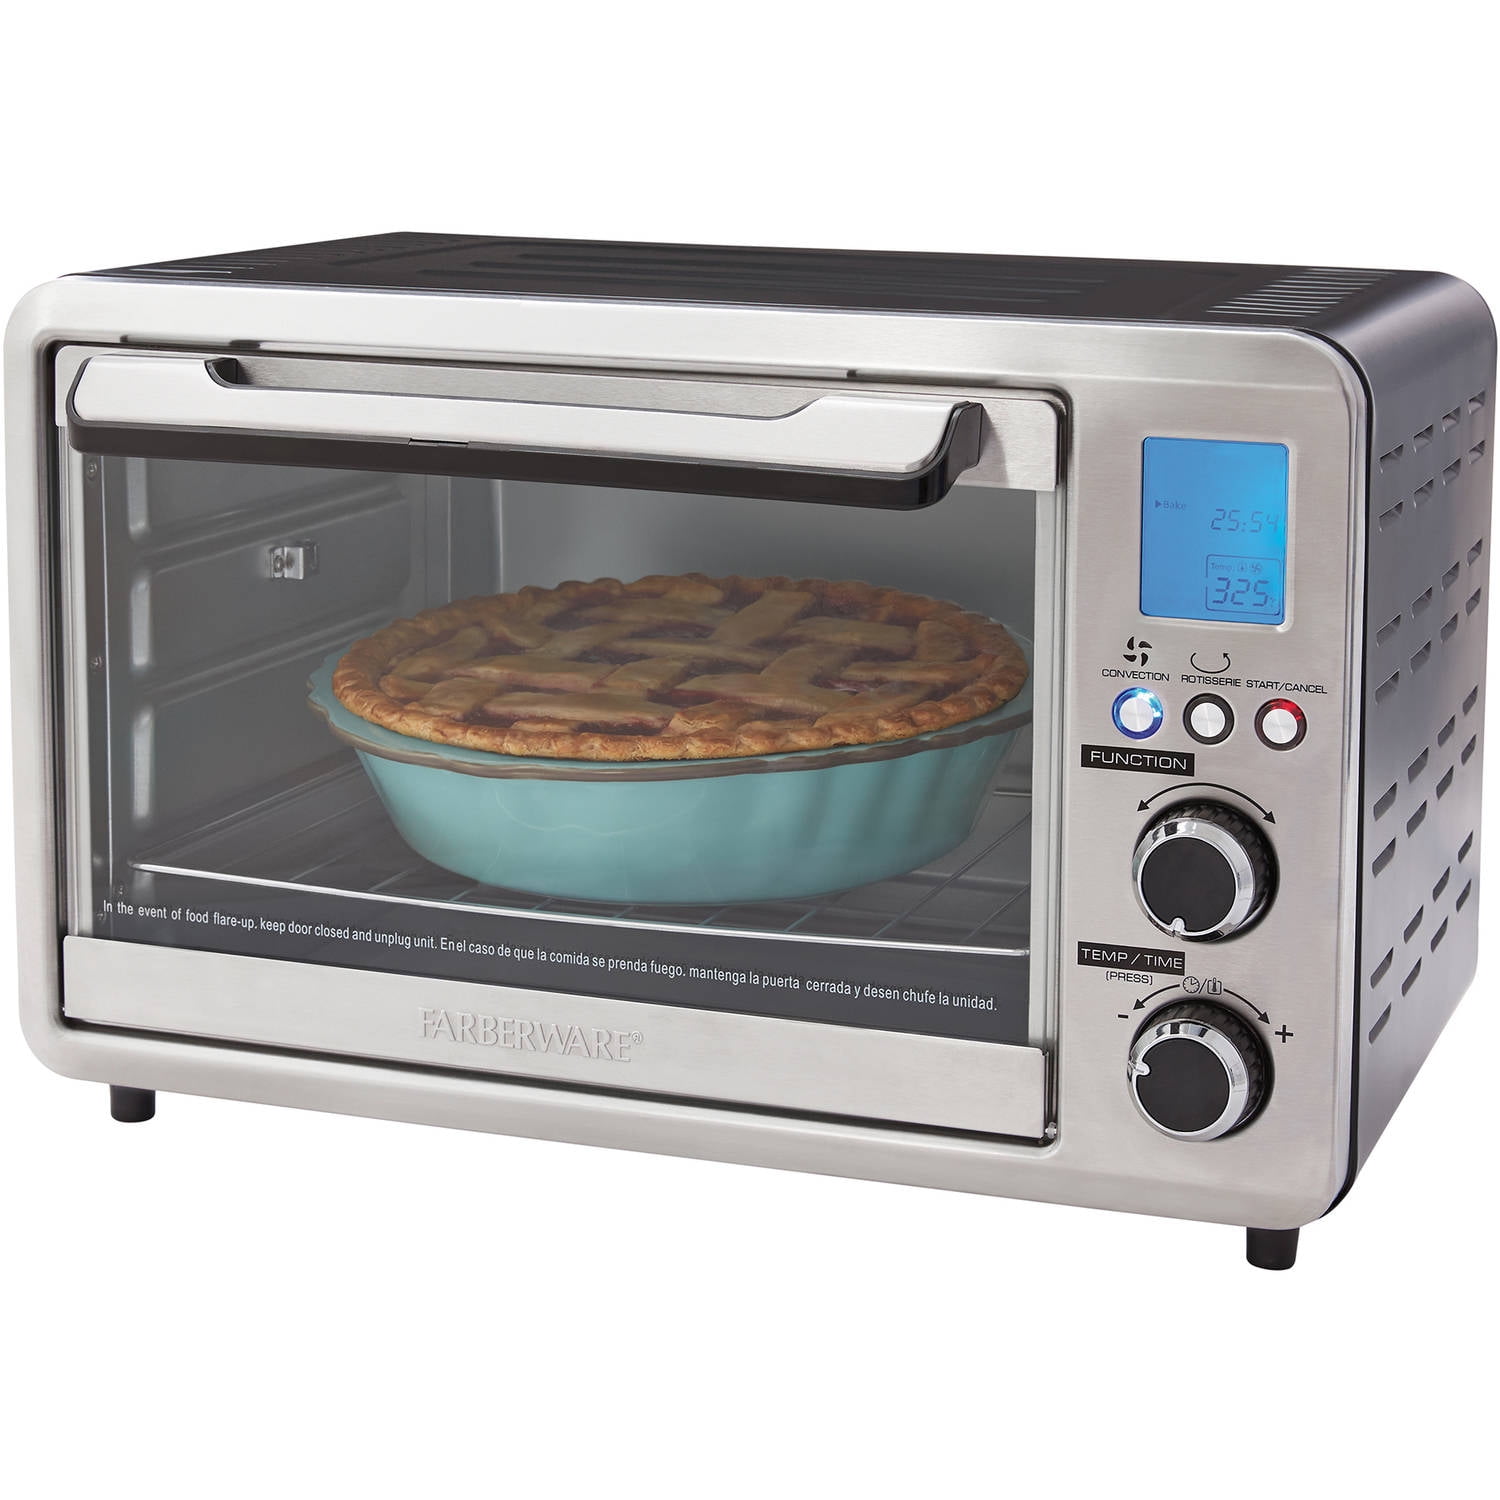 Farberware Digital Toaster Oven Walmart Com Walmart Com